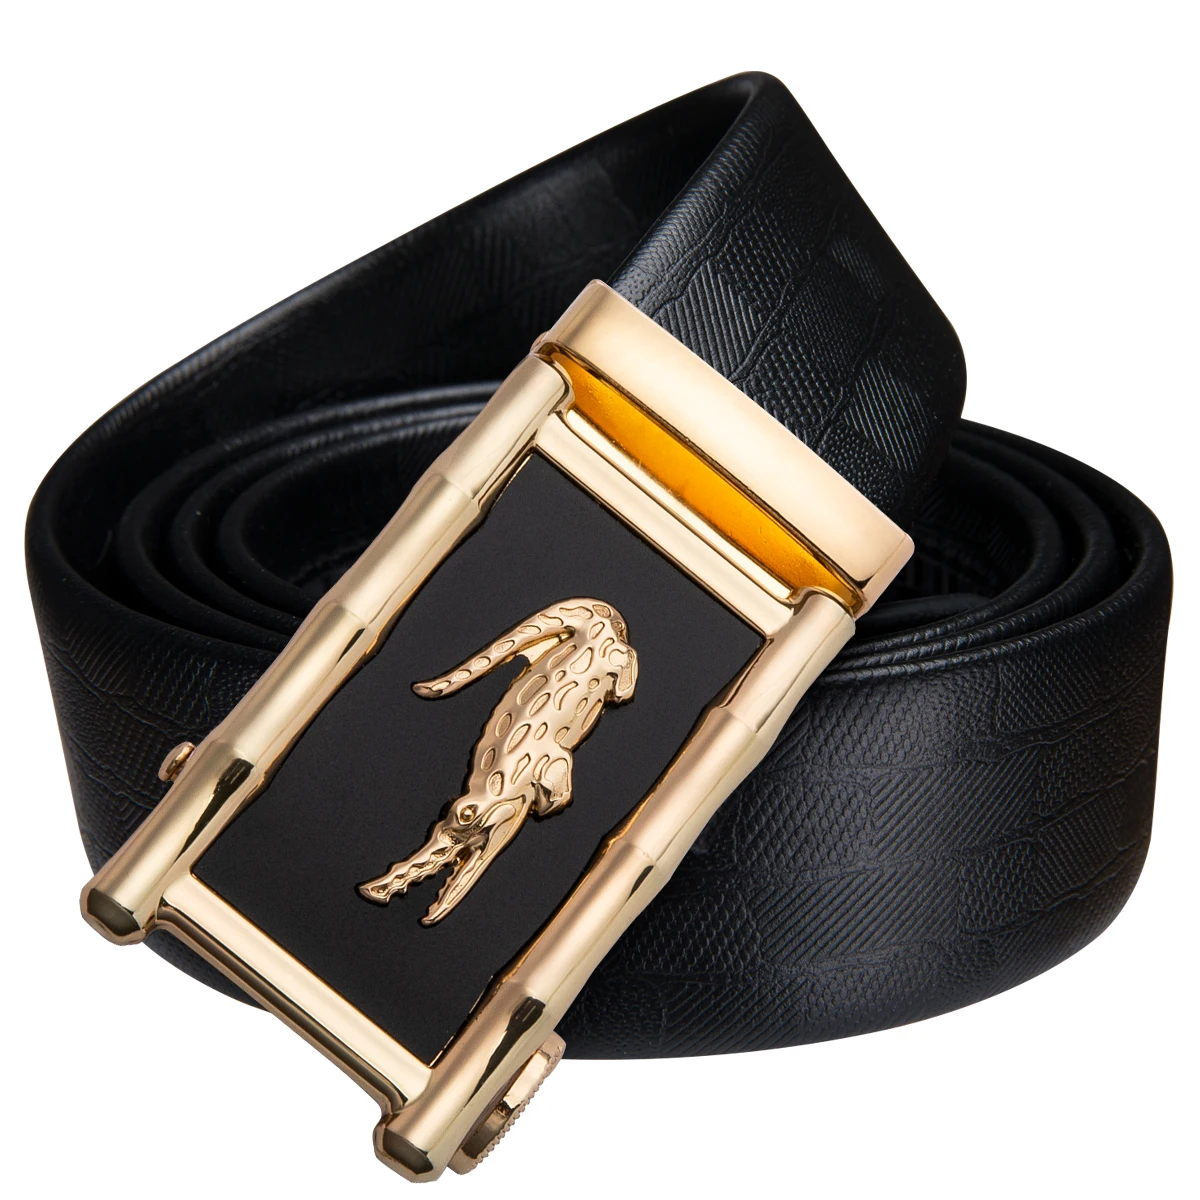 Mens Black Leather Belts for Men Gold Automatic Buckle Formal Leather Belt for Suit Business ...